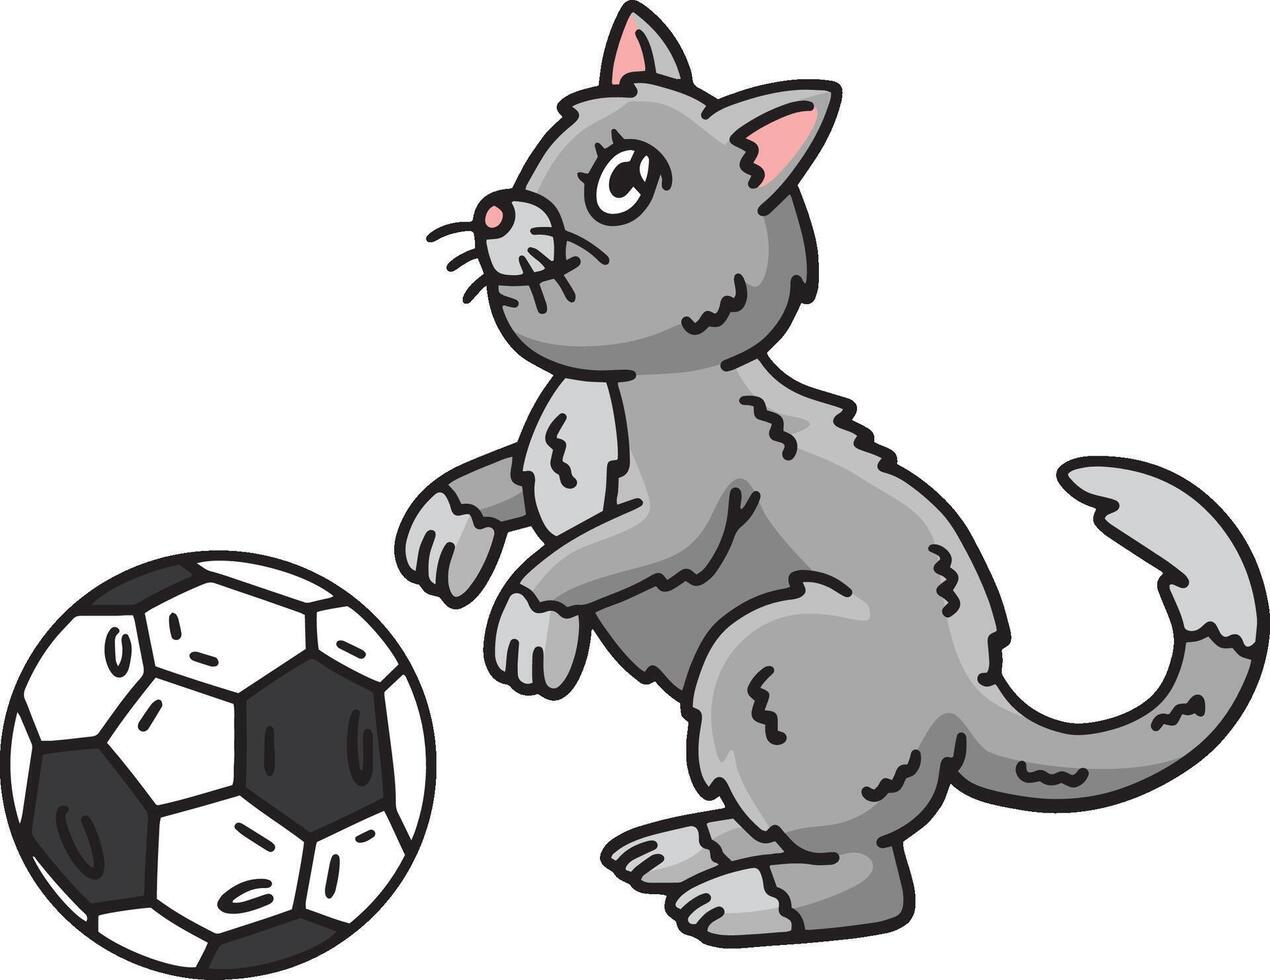 Katze spielen Fußball Karikatur farbig Clip Art vektor